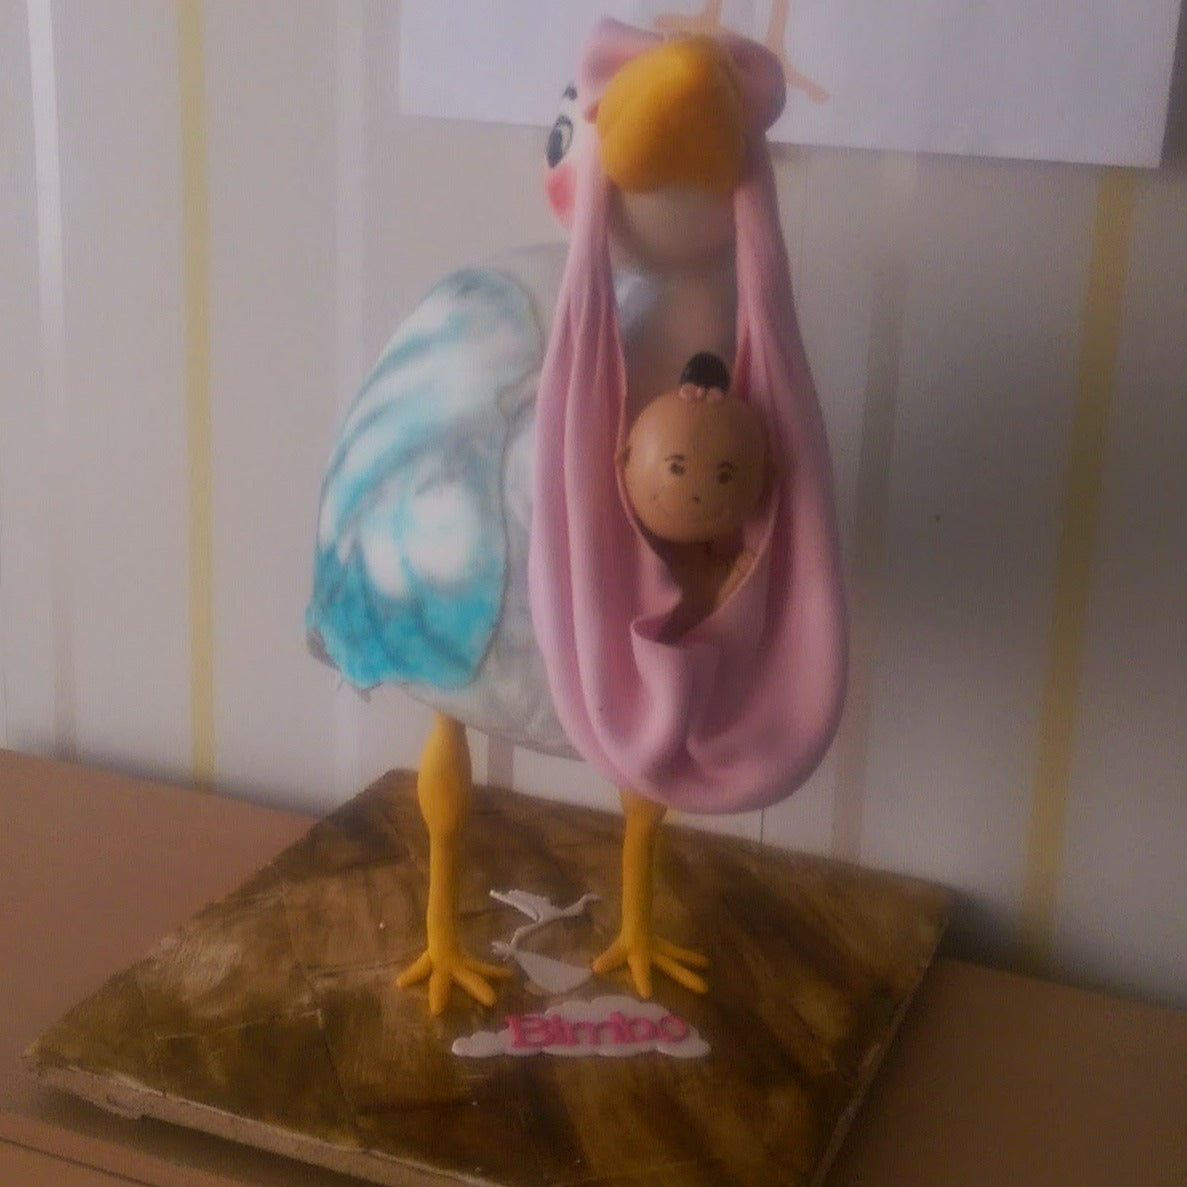 Stork and Baby cake